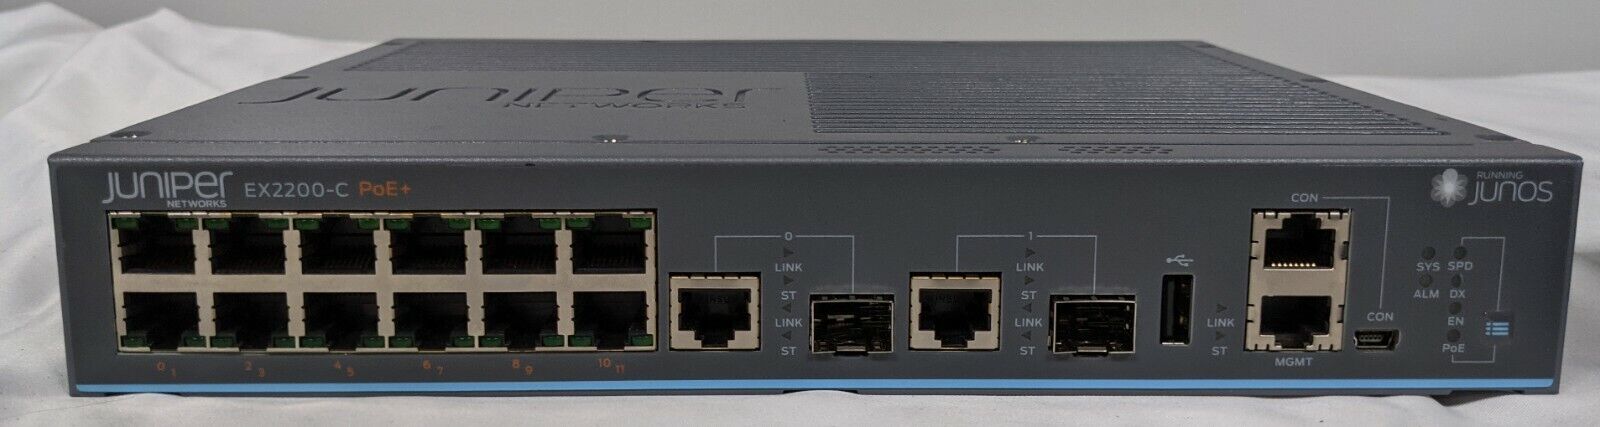 Juniper Networks EX2200-C-12P-2G 12-Port Gigabit Ethernet Switch